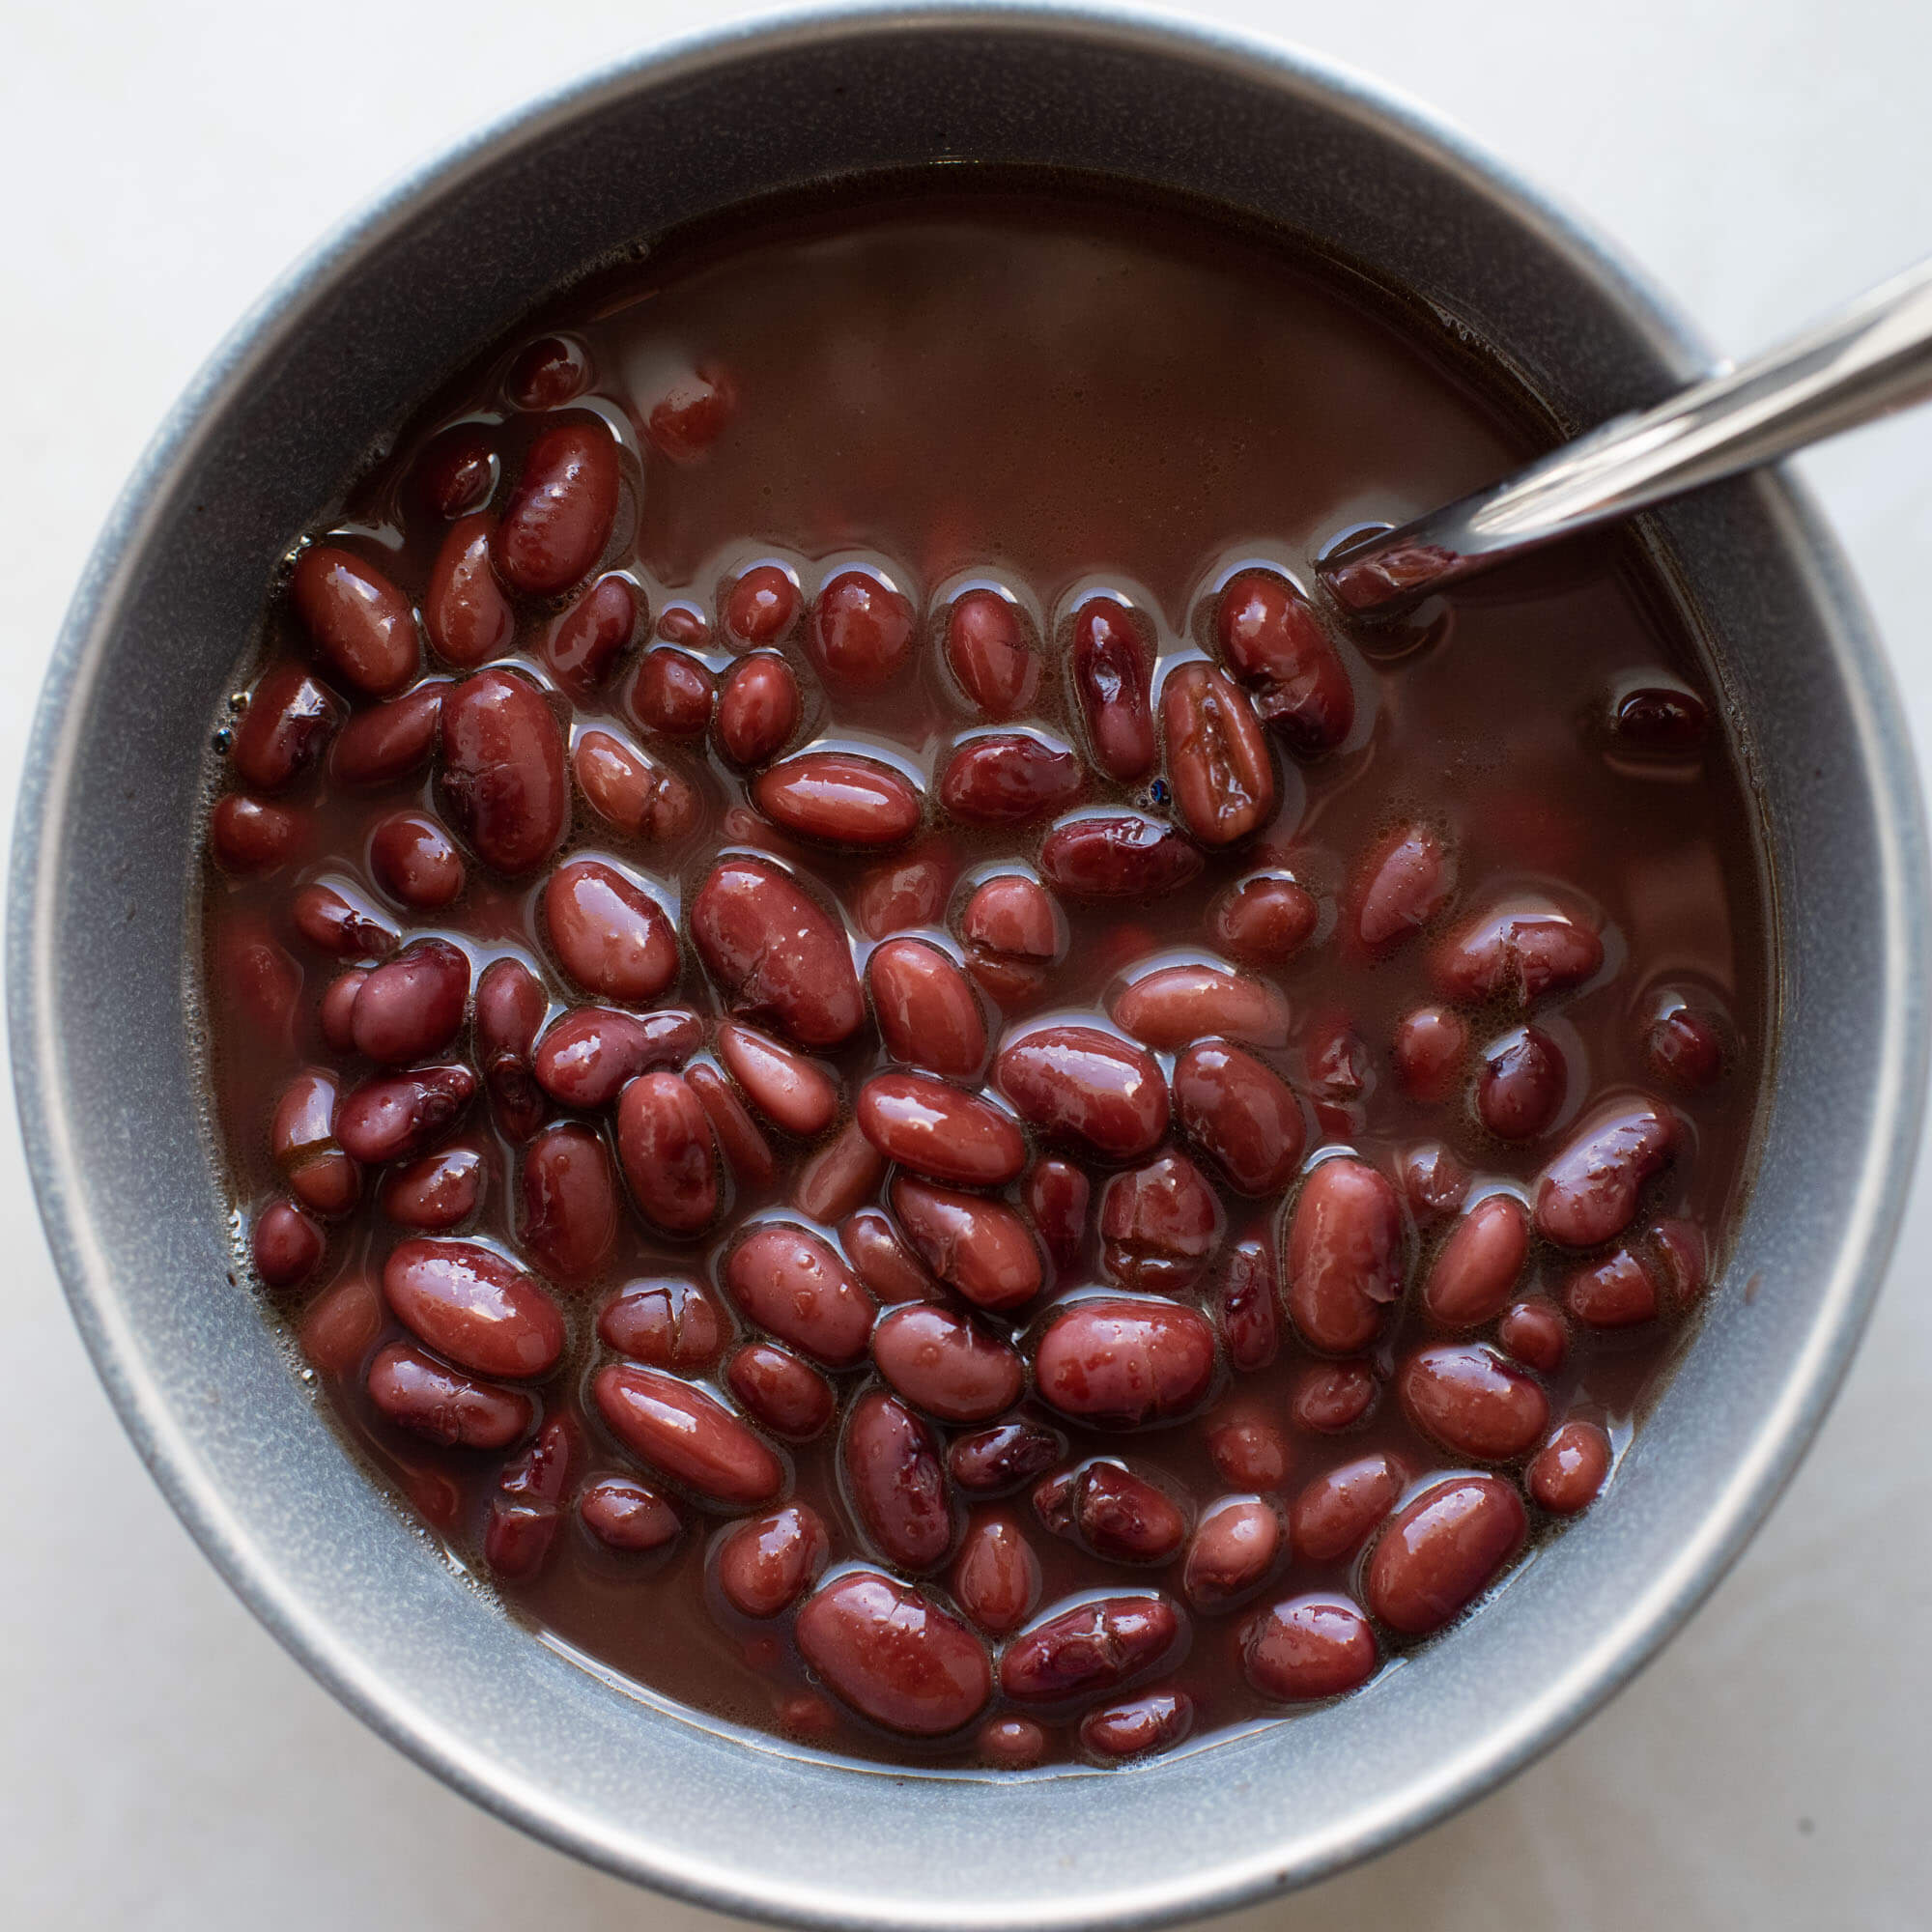 Primary Beans brothy Organic Sangre de Toro beans